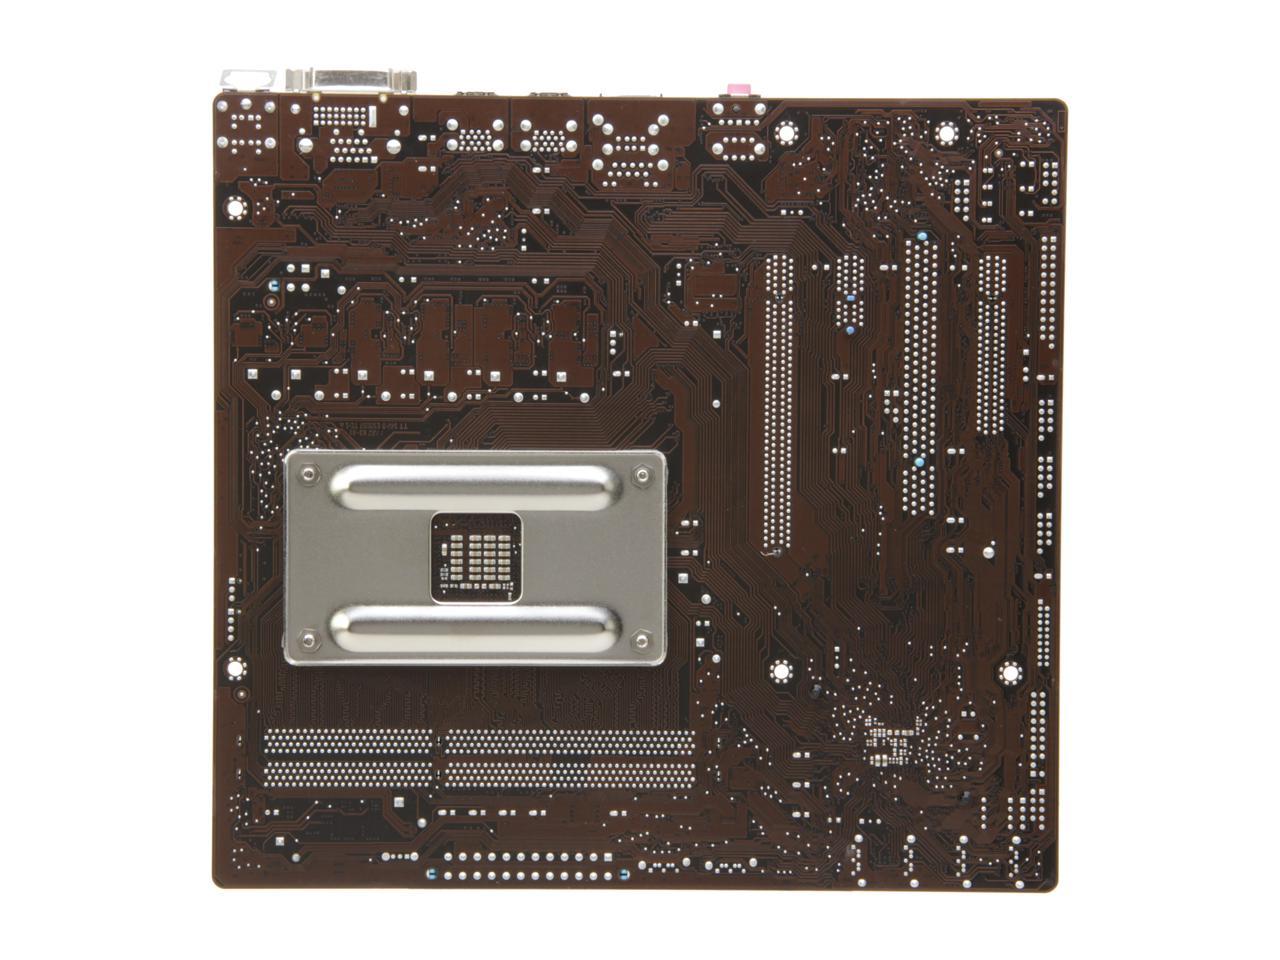 ASUS F1A55-M LE FM1 AMD A55 (Hudson D2) Micro ATX AMD Motherboard with UEFI BIOS